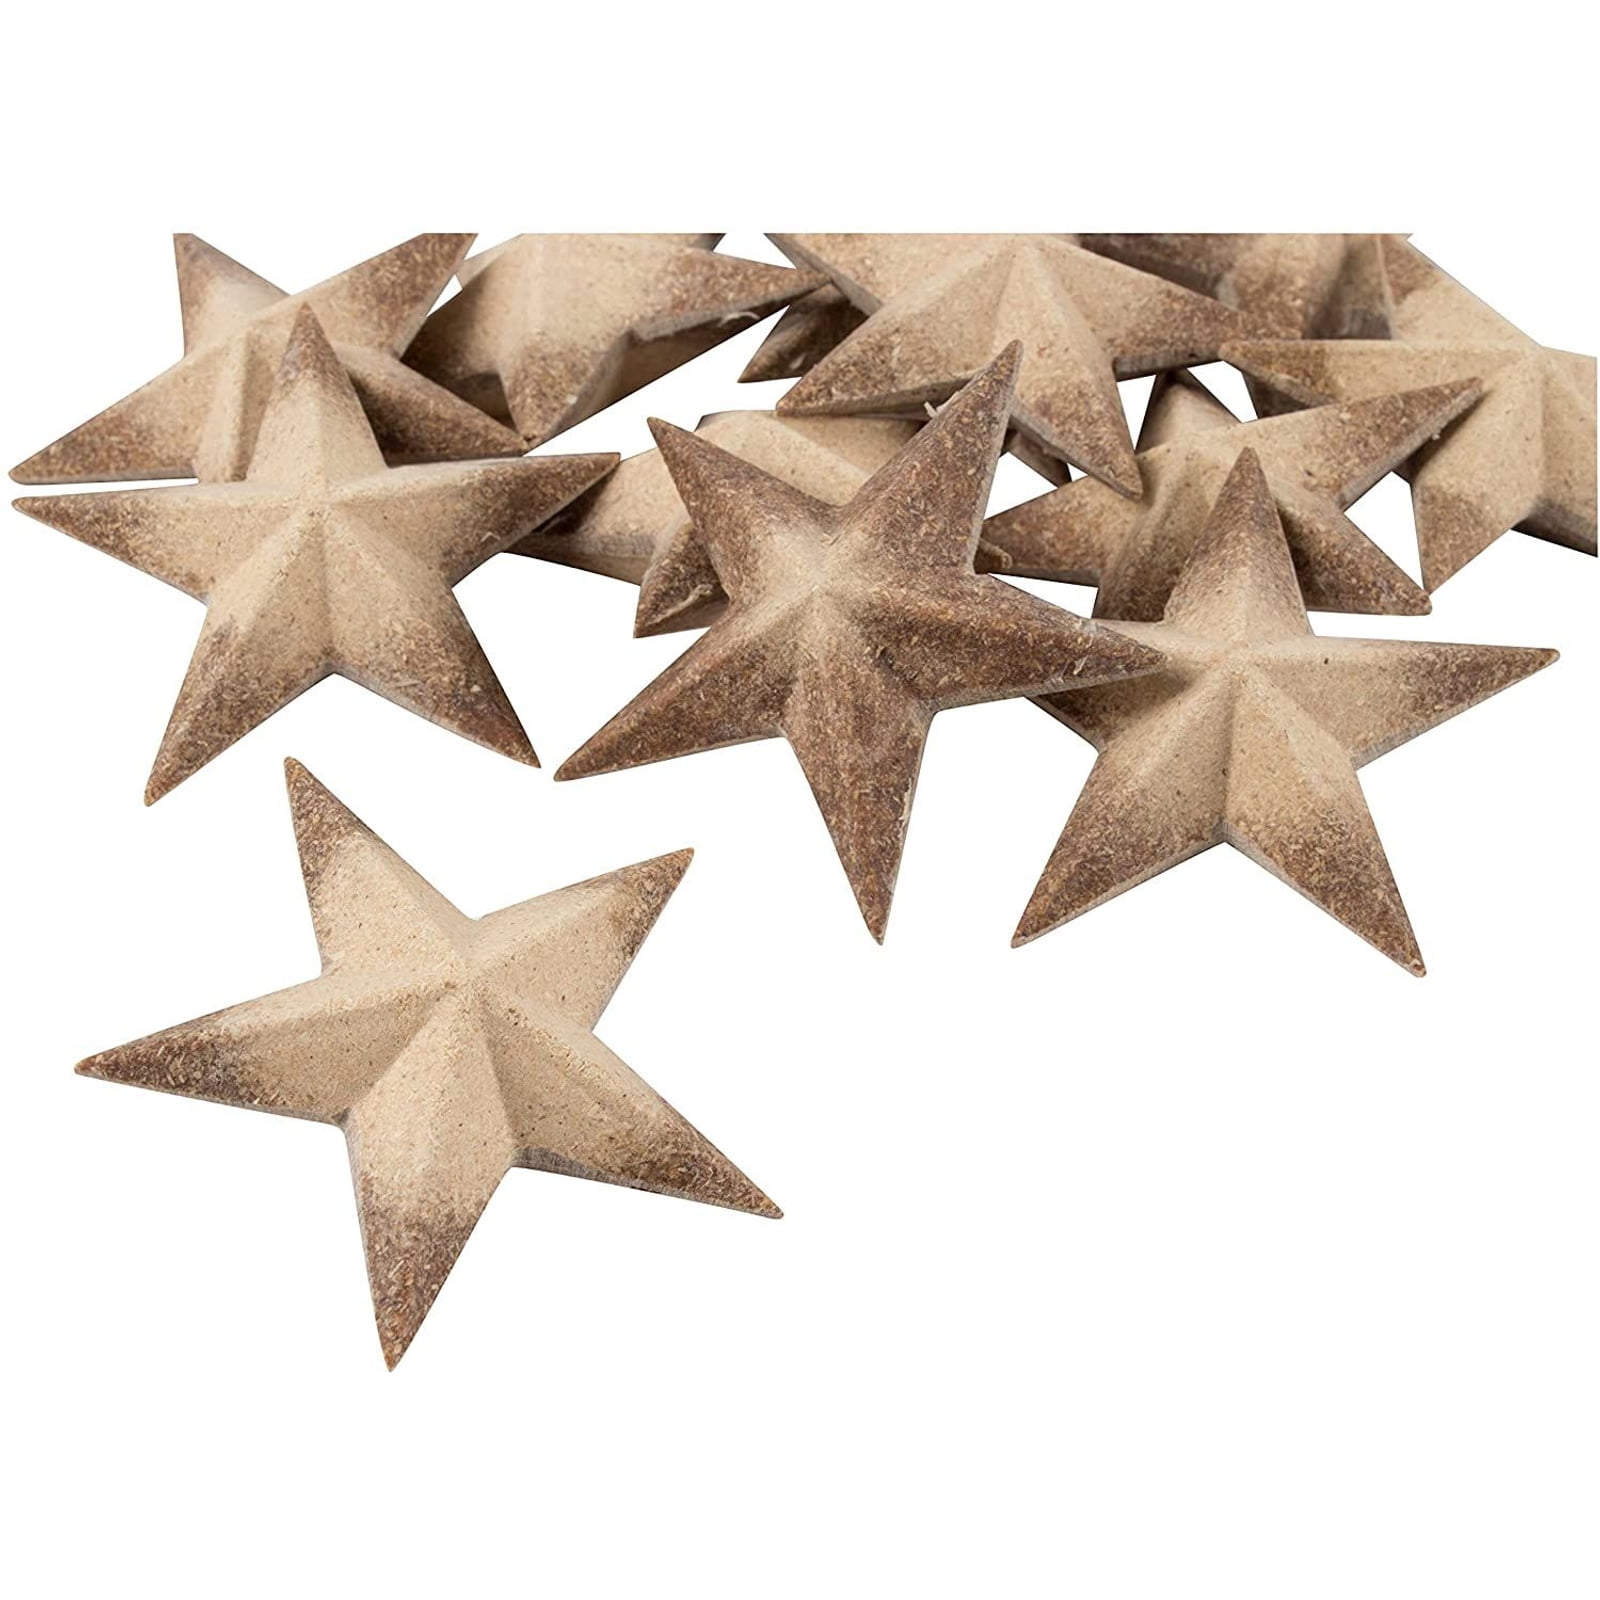 Crafts Scrapbooking Handmade Wooden Tags Star Shape Embellishments Ornaments